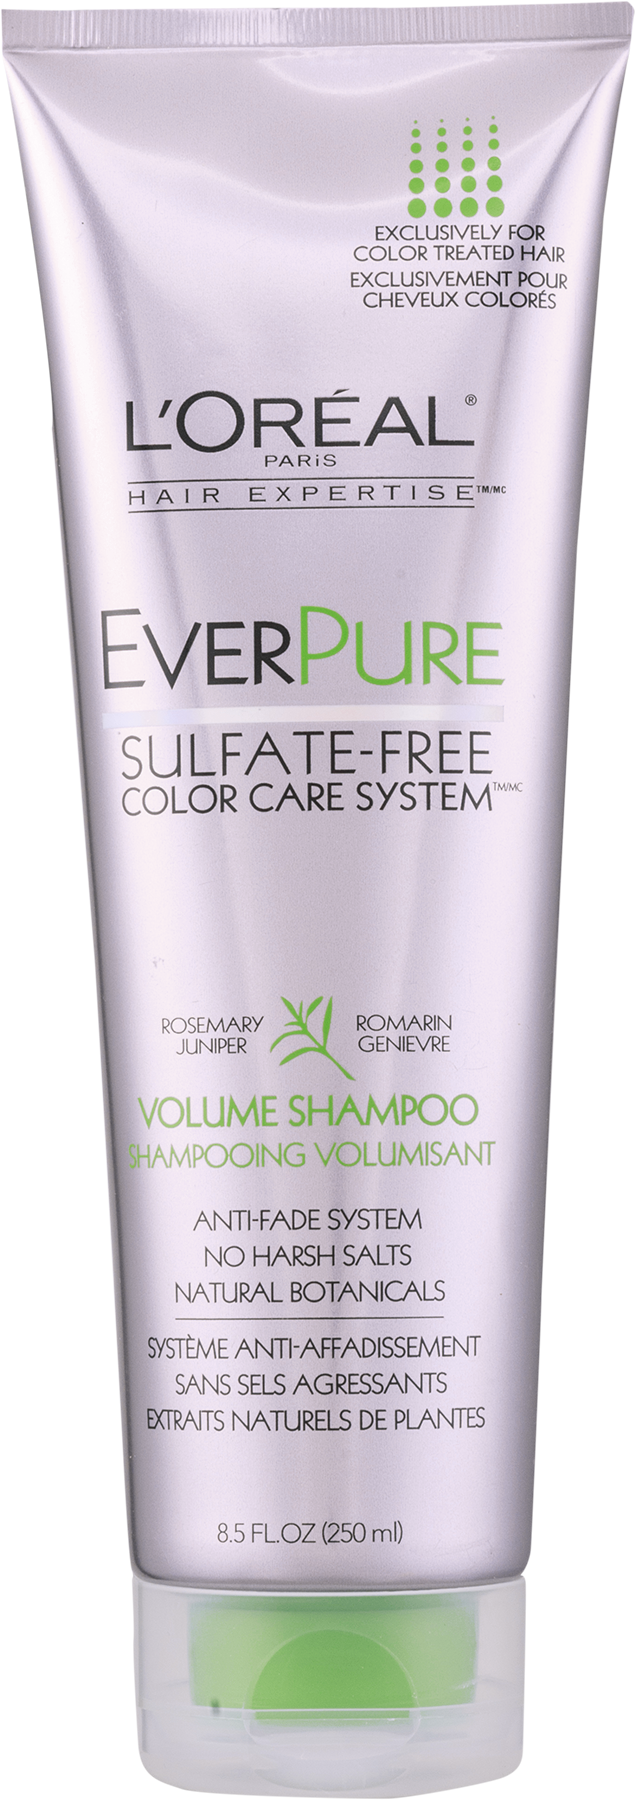 L'Oreal Paris Hair Expertise EverPure Volume Shampoo, 8.5 FL OZ - image 2 of 9